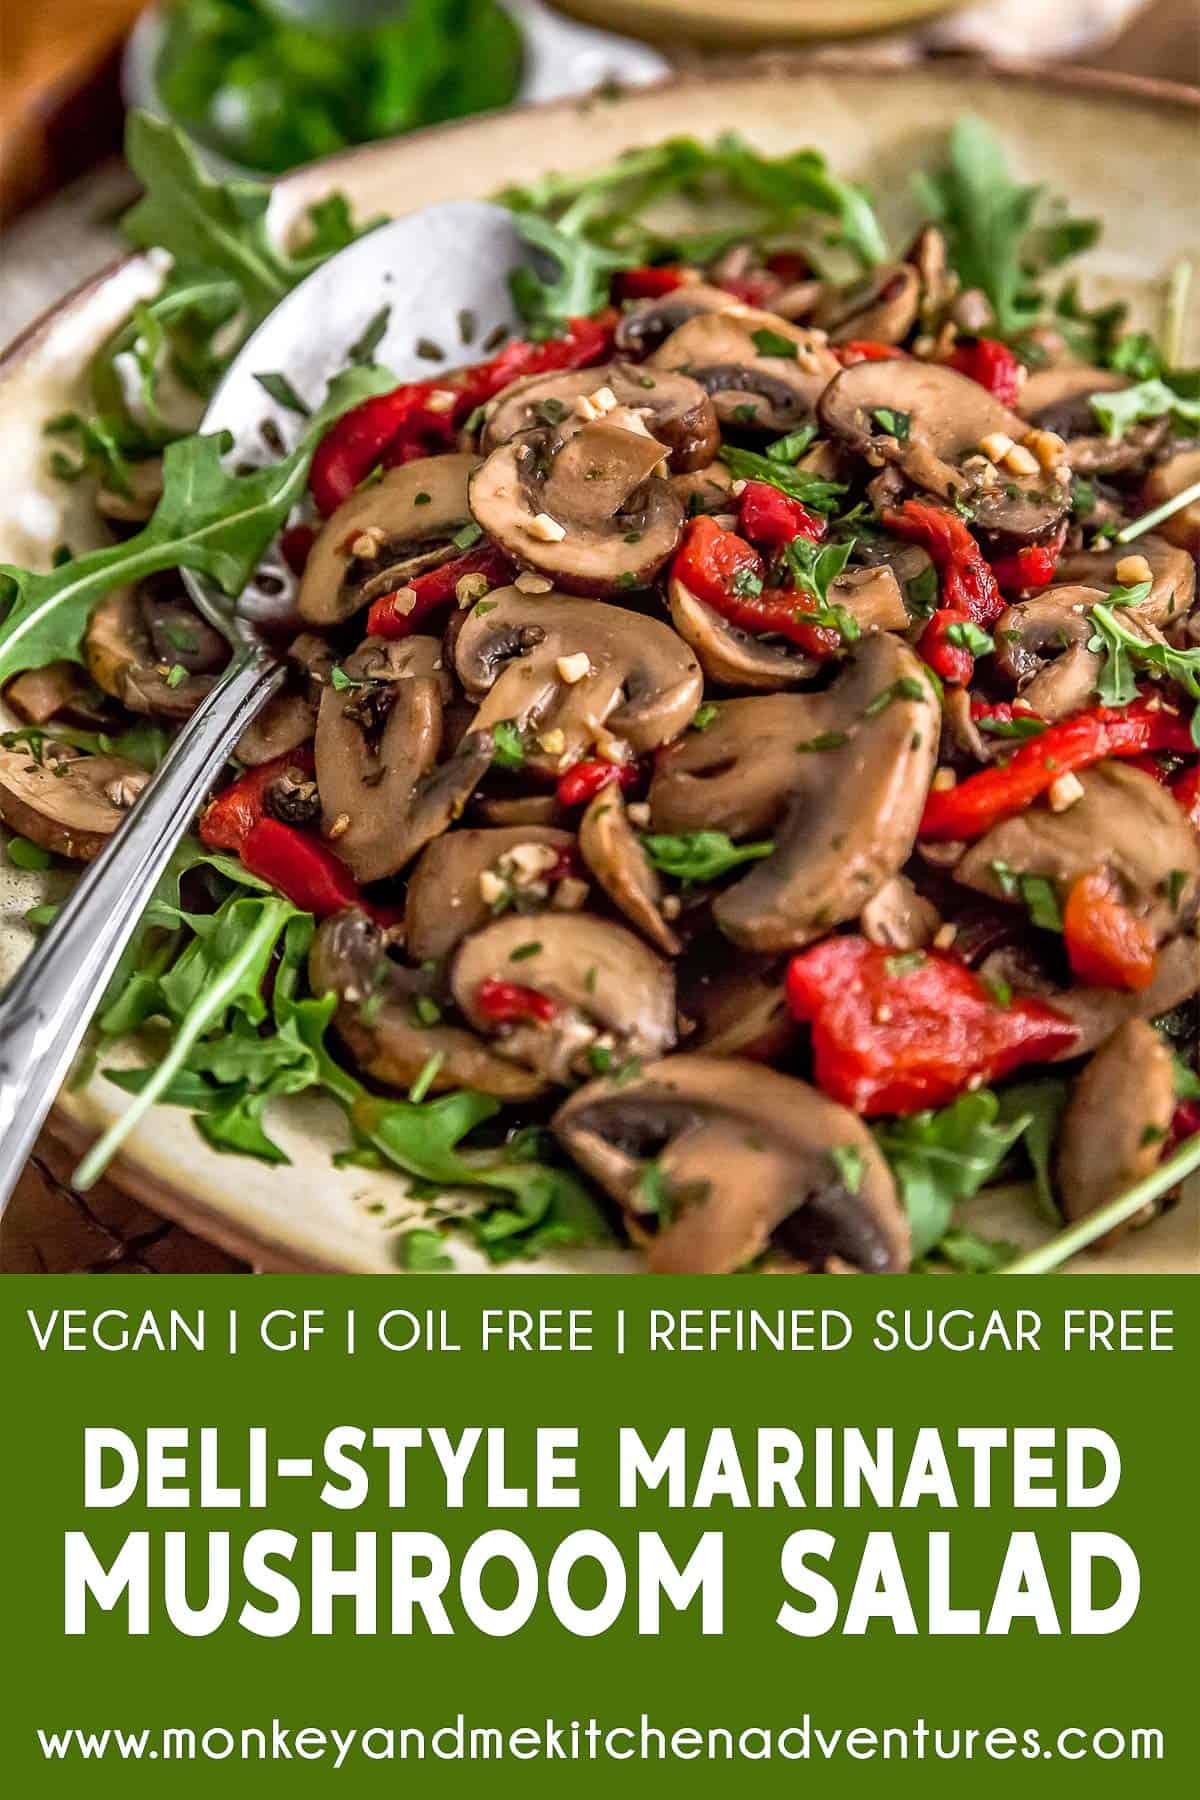 Deli-Style Marinated Mushroom Salad with Text Description